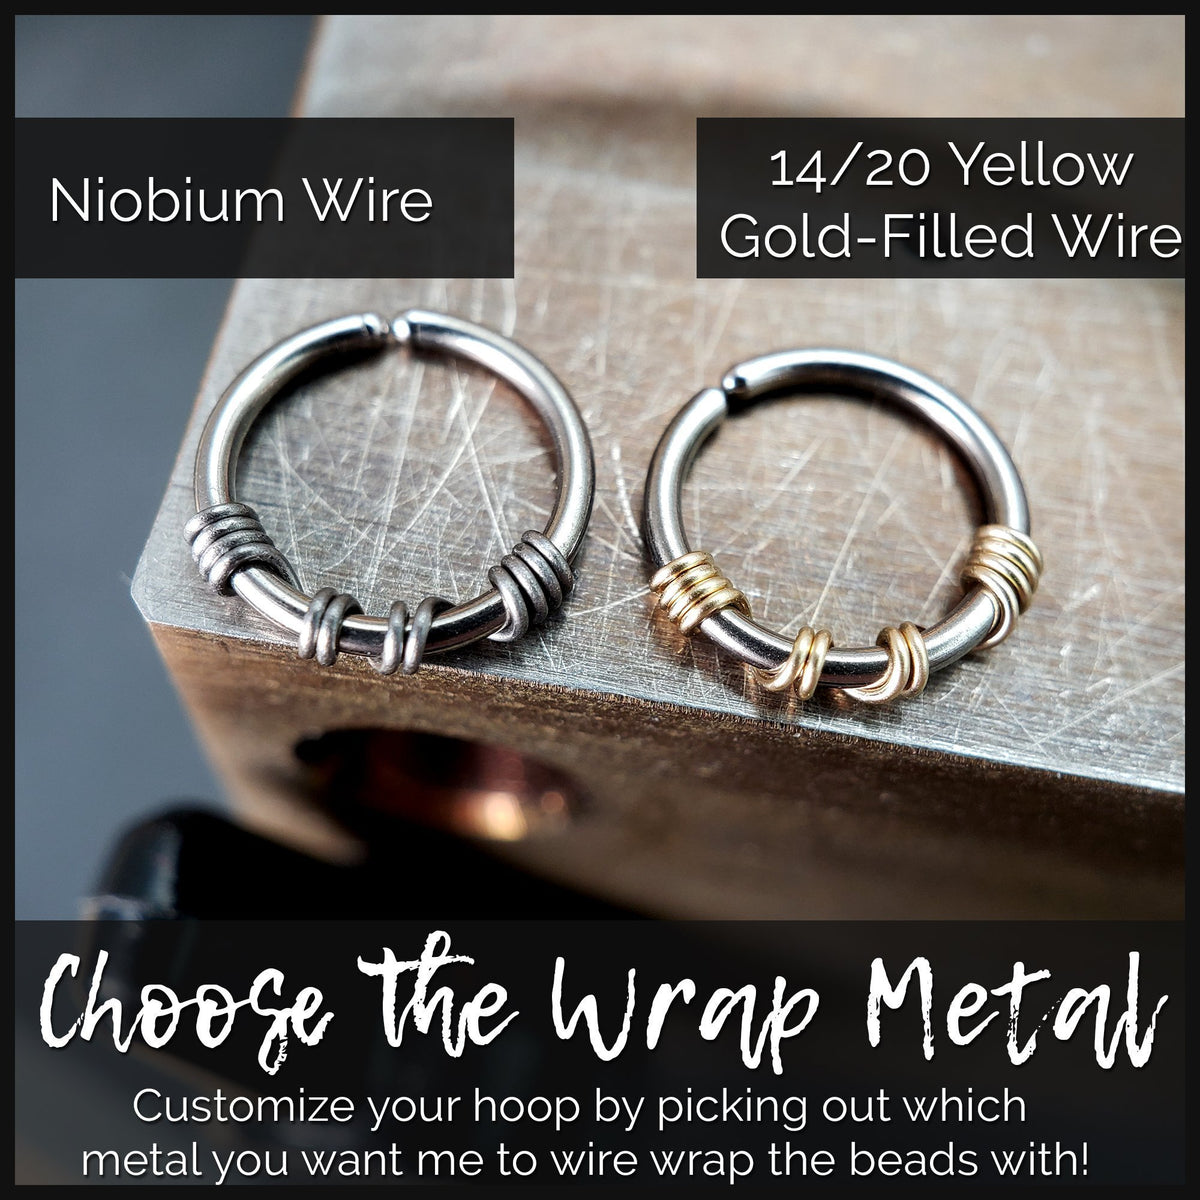 Custom Build Your Own Beaded Nose Hoop - Choose the Colors - Metal Lotus